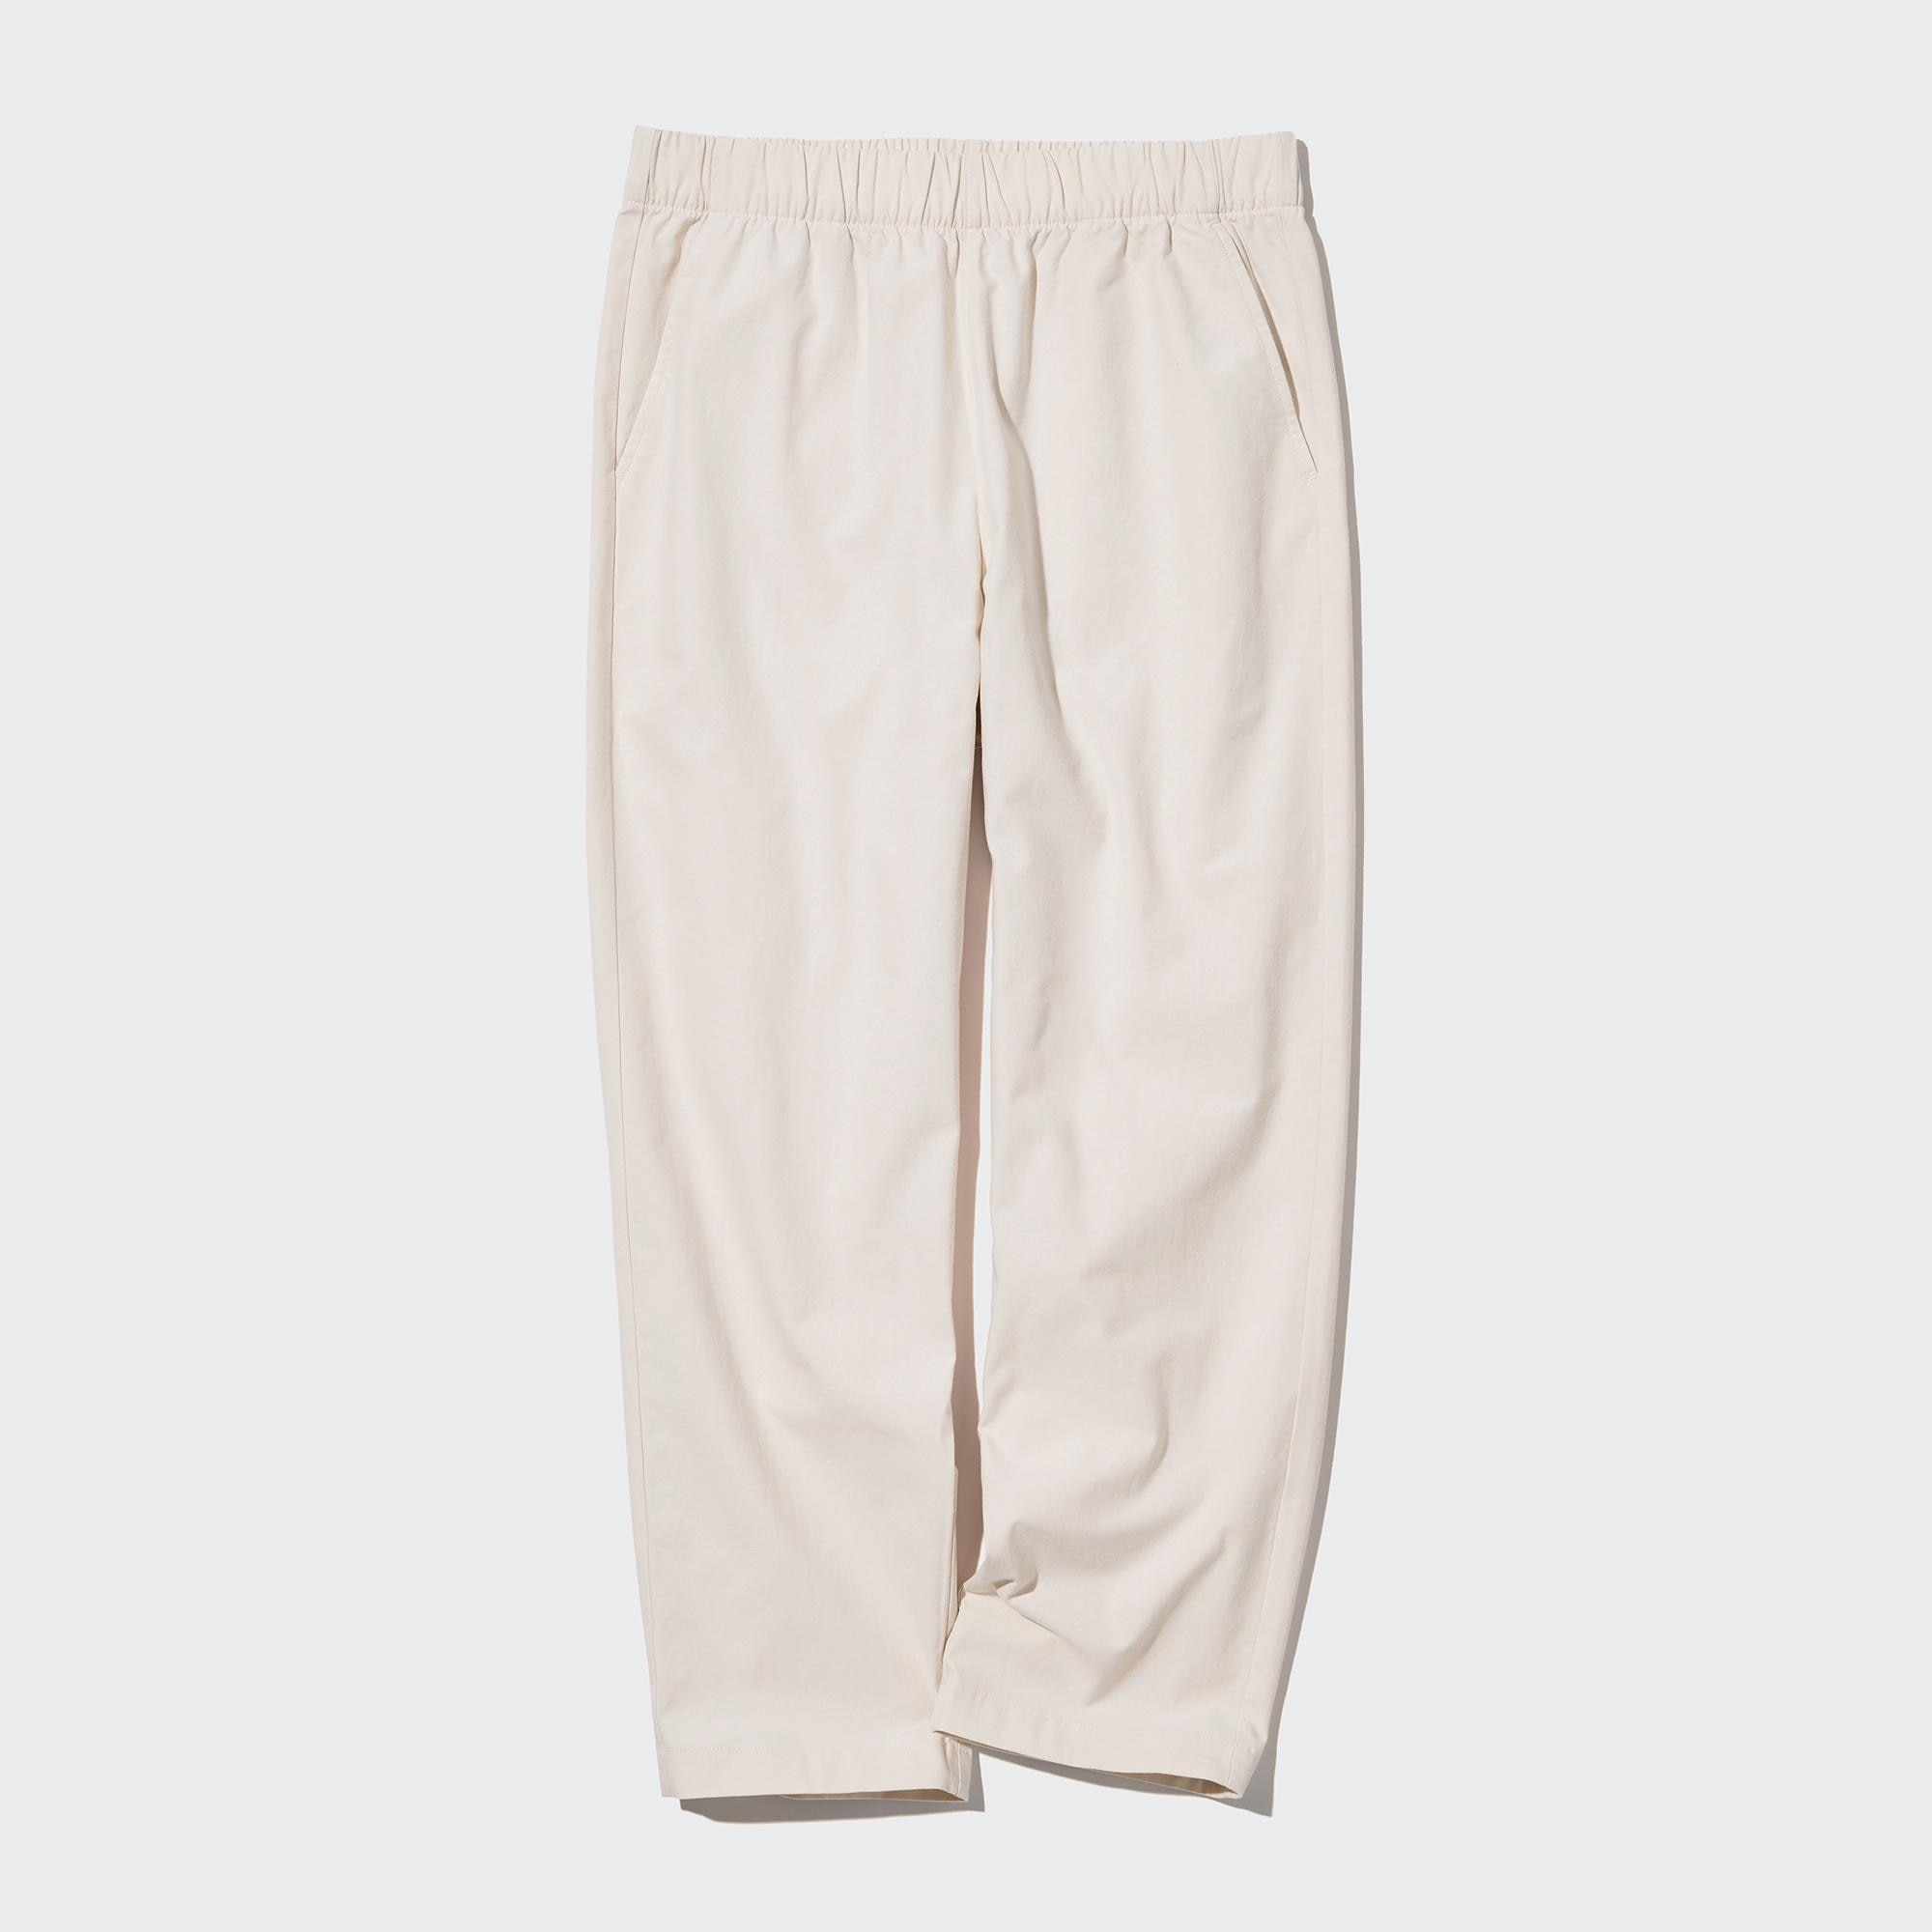 Buy Max Womens Slim Casual Pants SFB2613Beige34 at Amazonin